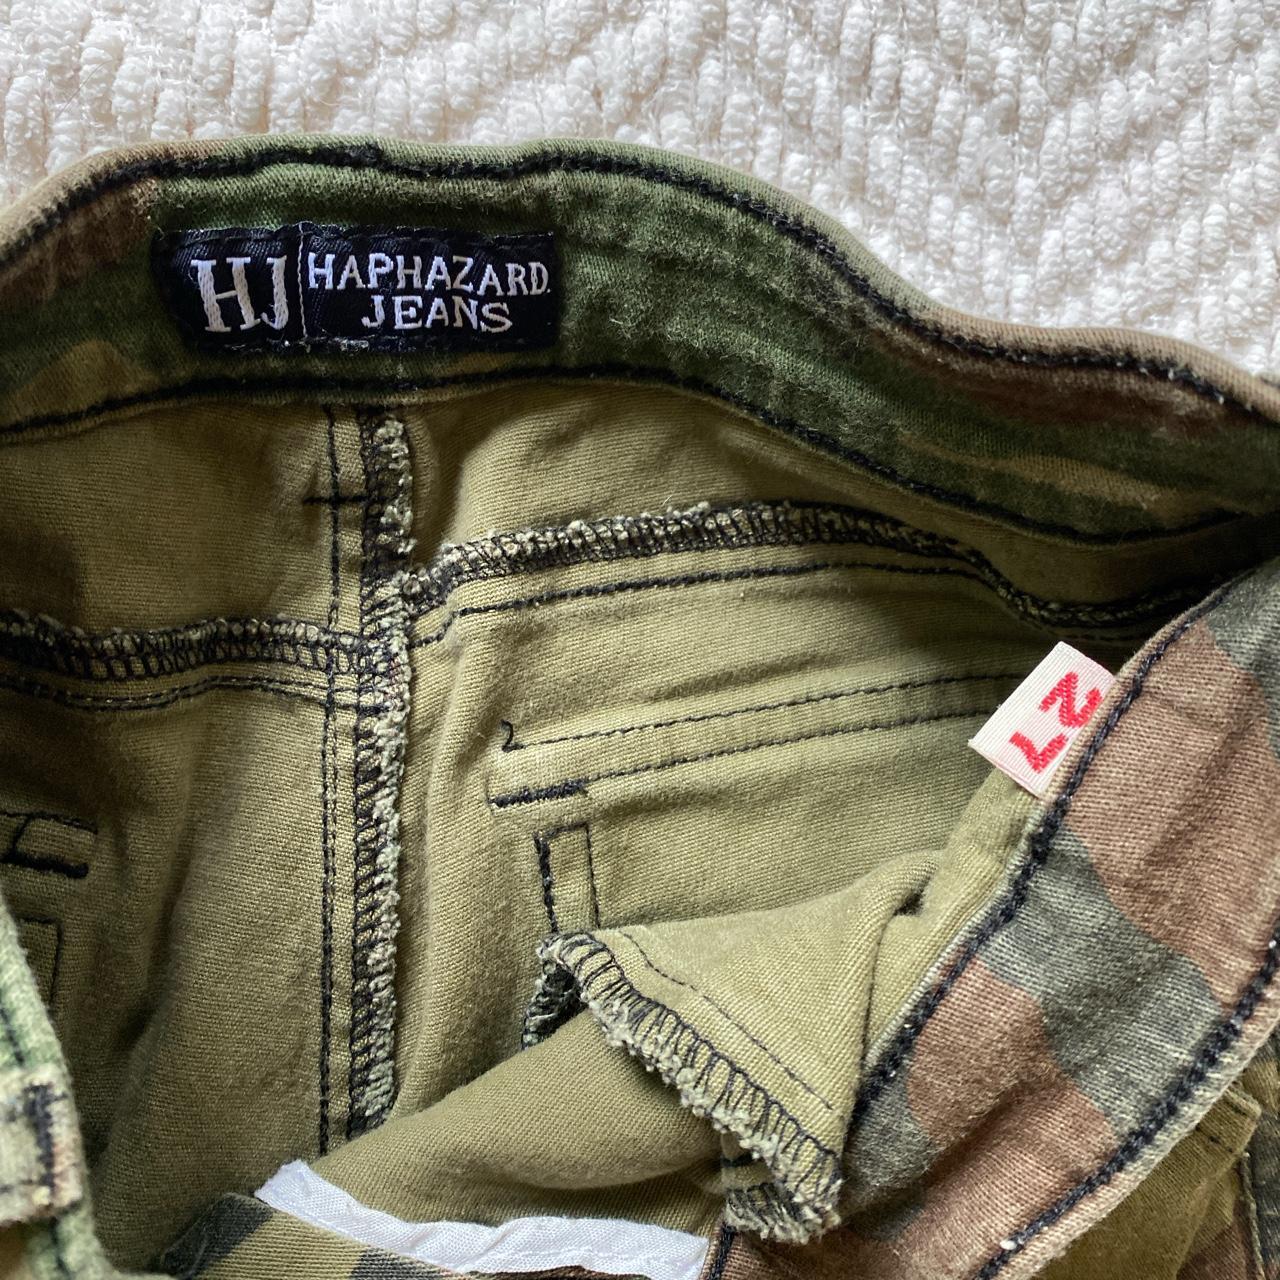 Y2K 'HJ Haphazard Jeans' cargo capri pants, Made in... - Depop